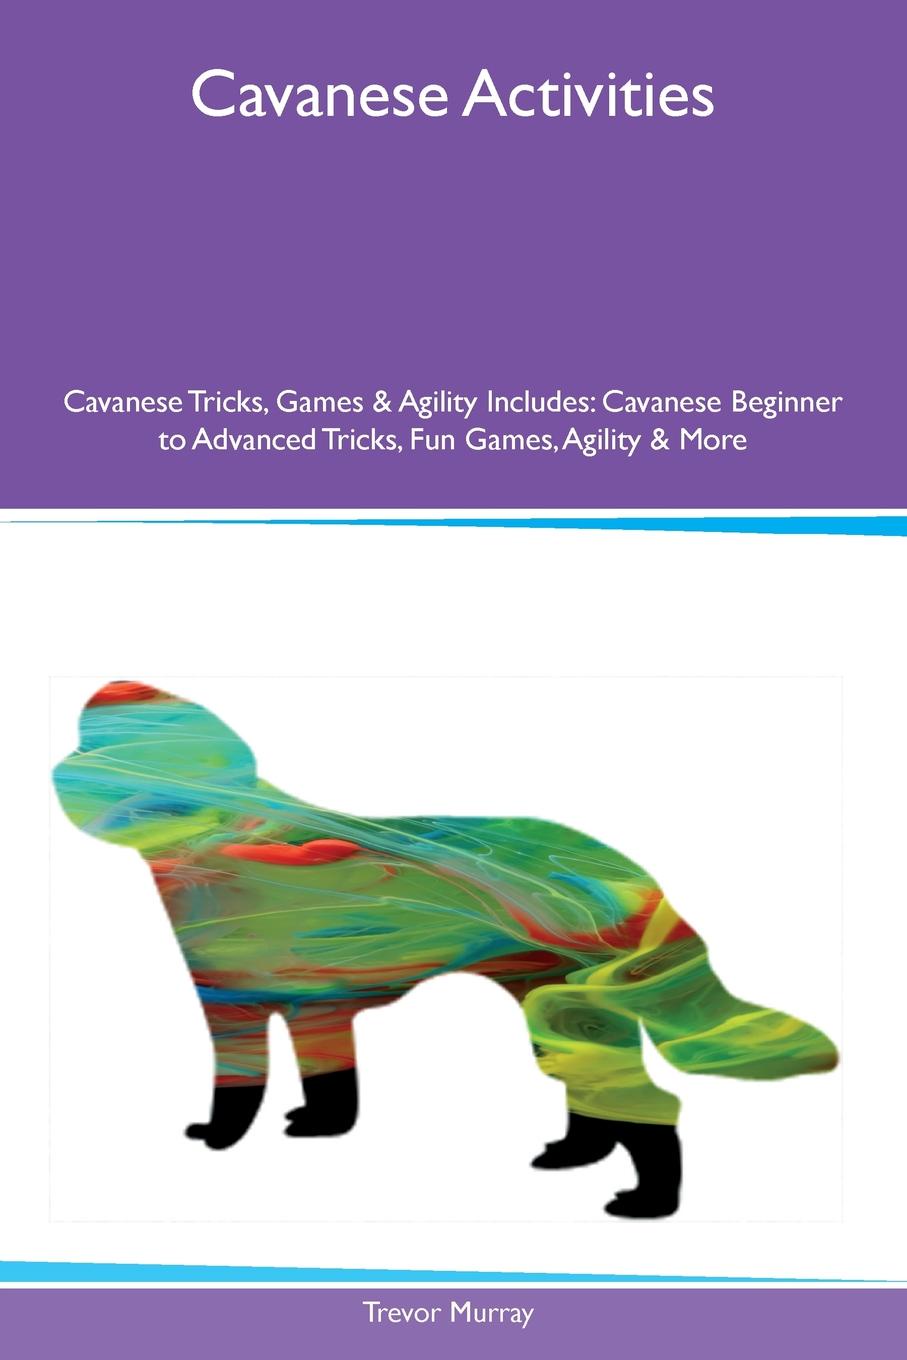 Cavanese Activities Cavanese Tricks, Games & Agility Includes. Cavanese Beginner to Advanced Tricks, Fun Games, Agility & More